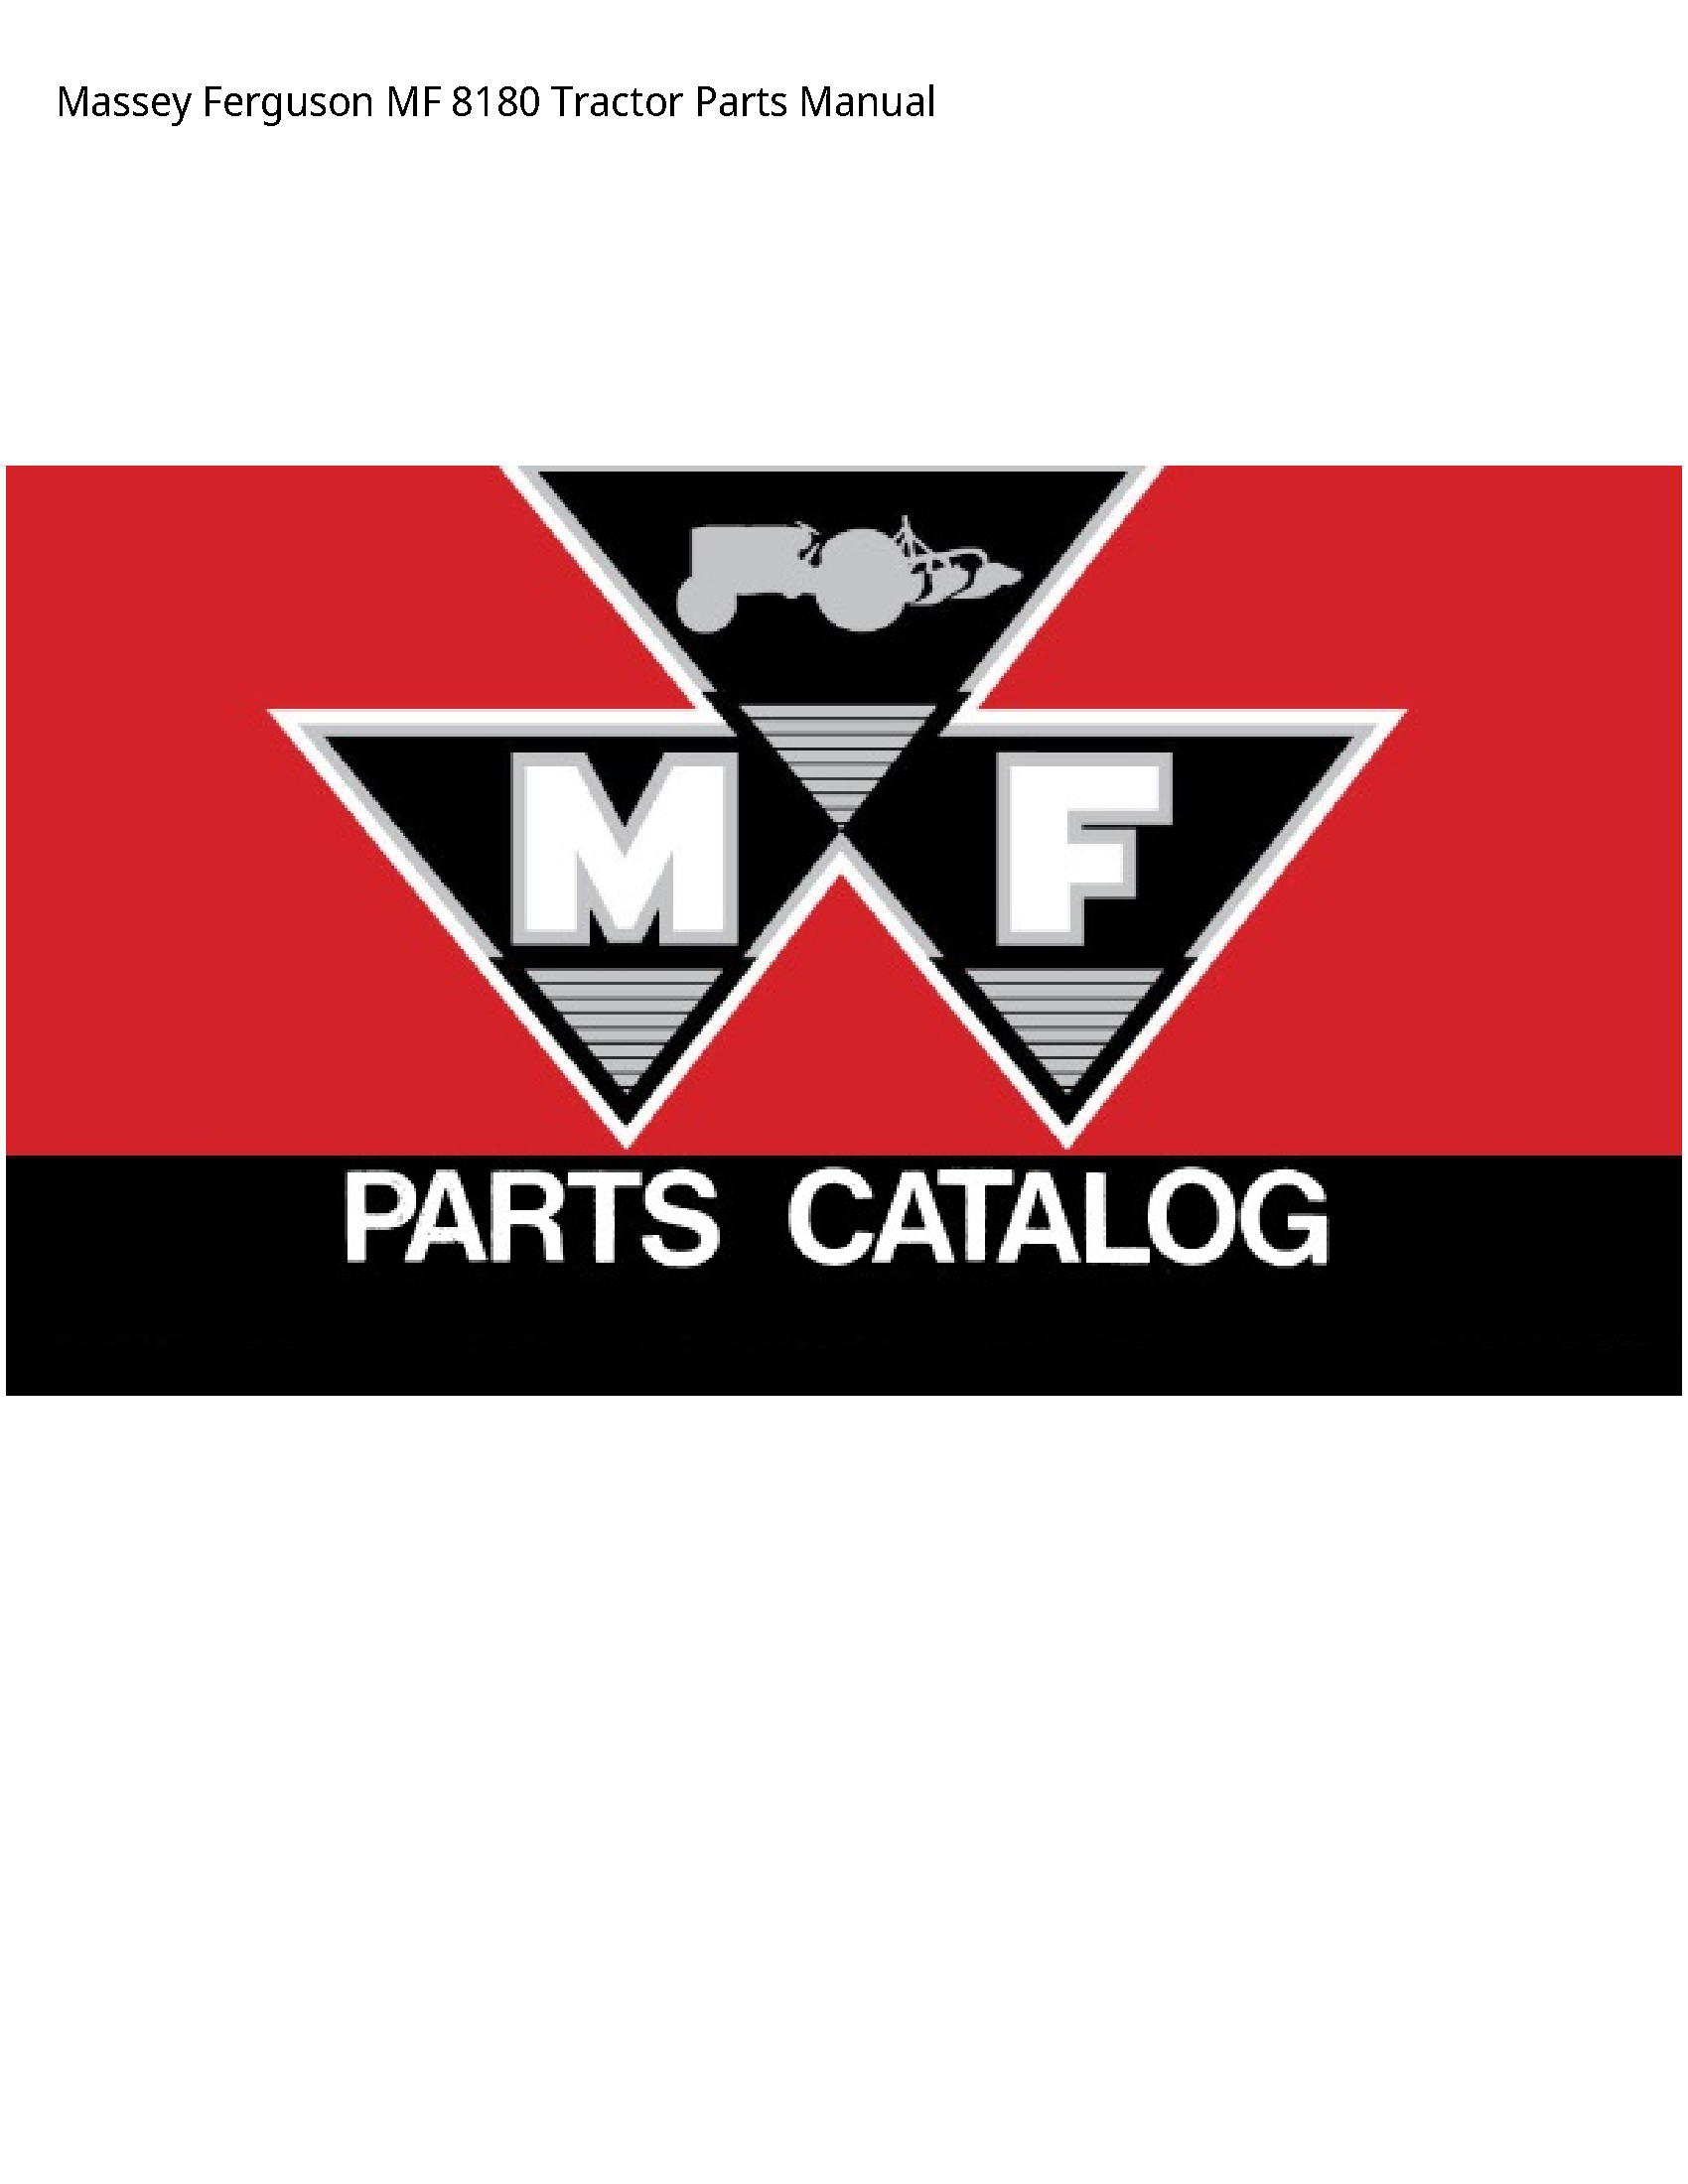 Massey Ferguson 8180 MF Tractor Parts manual